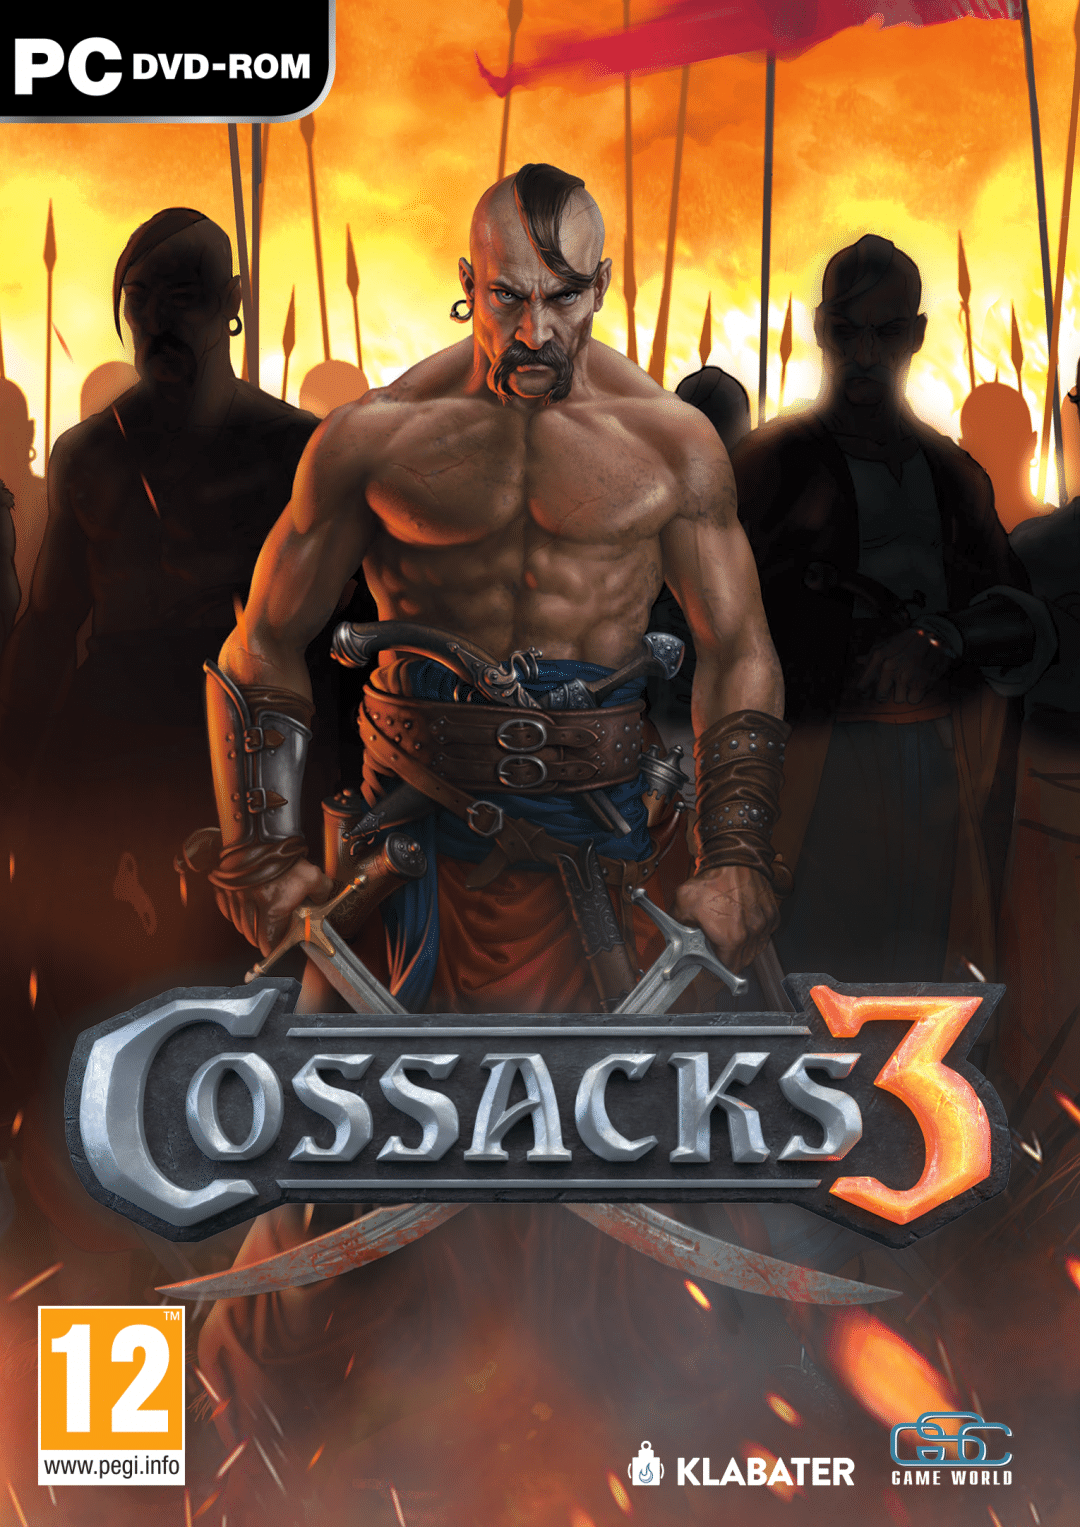 Image of Cossacks 3